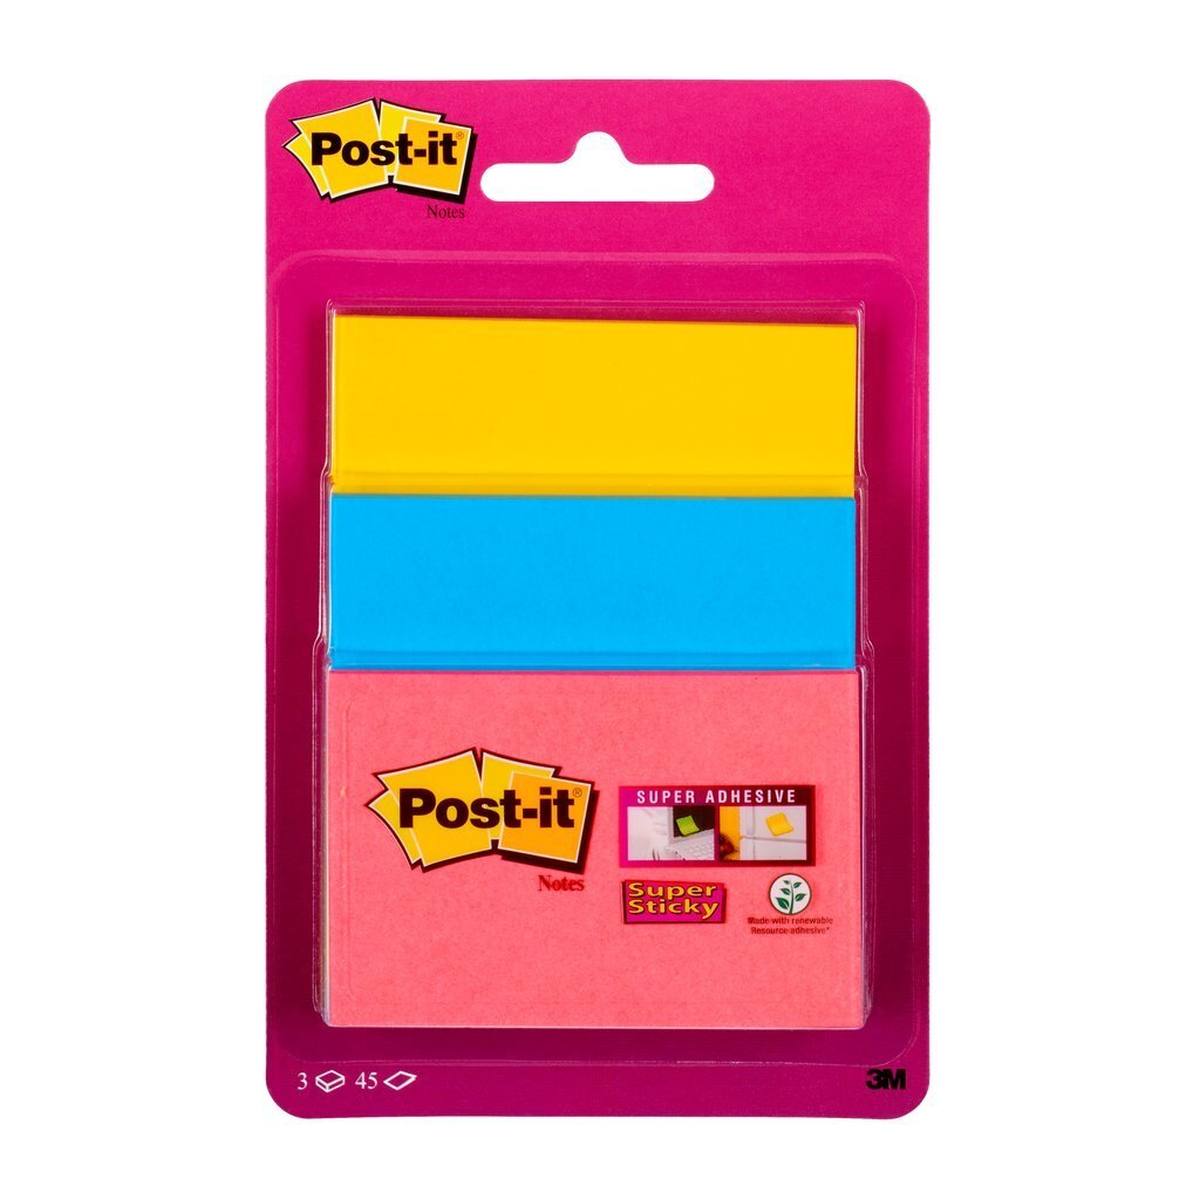 3M Post-it Super Sticky Notes 34323BYP, 3 blocs de 45 hojas, rojo amapola, 48 mm x 76 mm, azul ultra, 76 mm x 76 mm, amarillo ultra, 76 mm x 101 mm